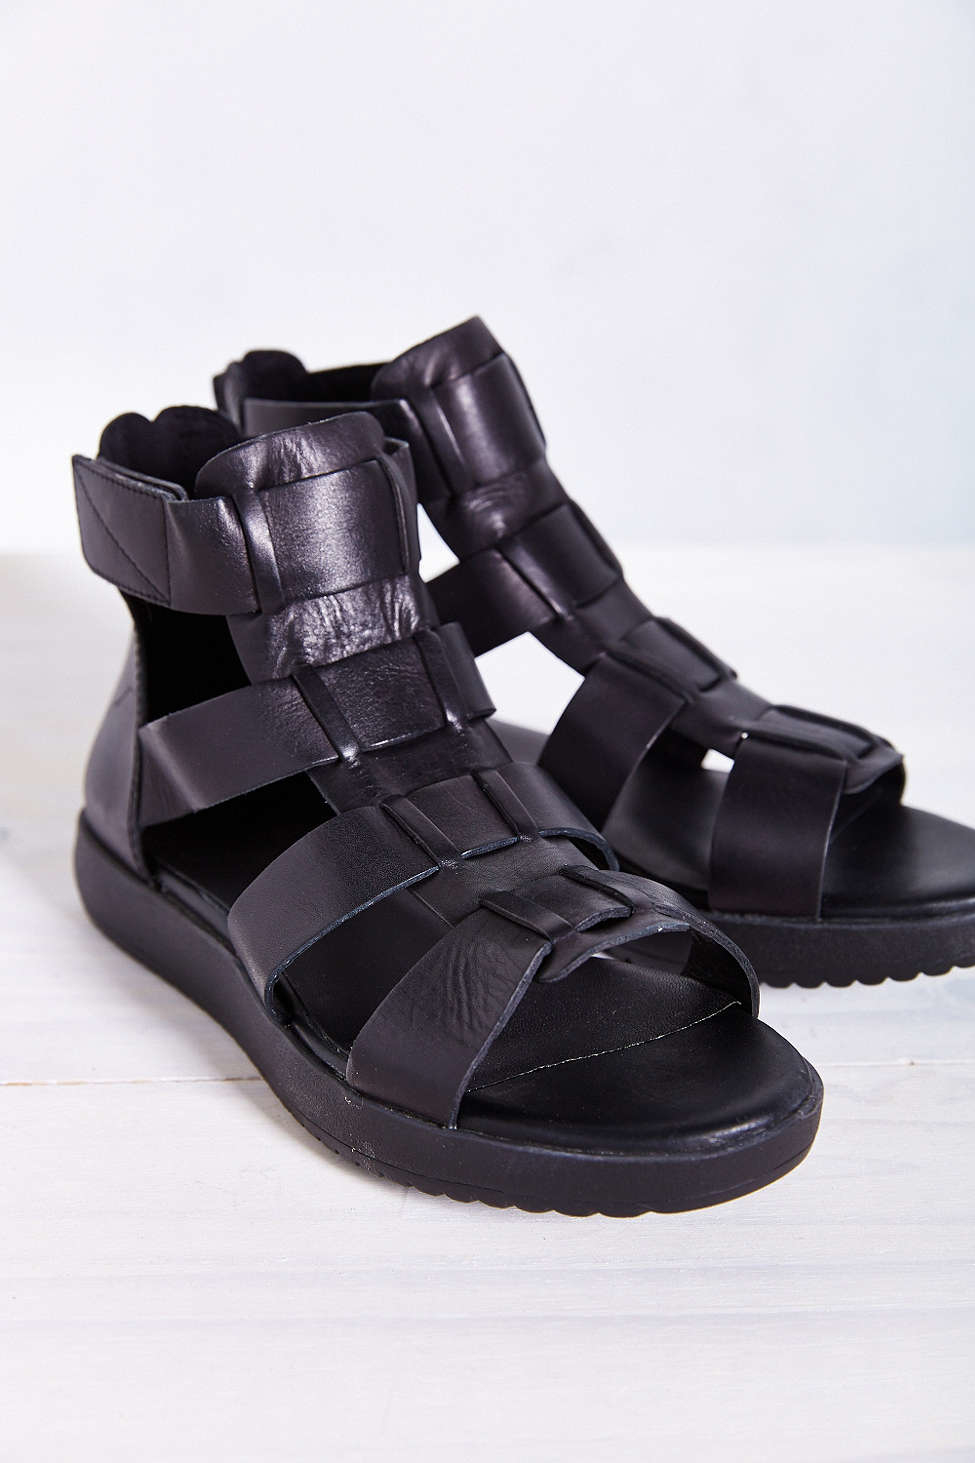 vagabond gladiator sandals